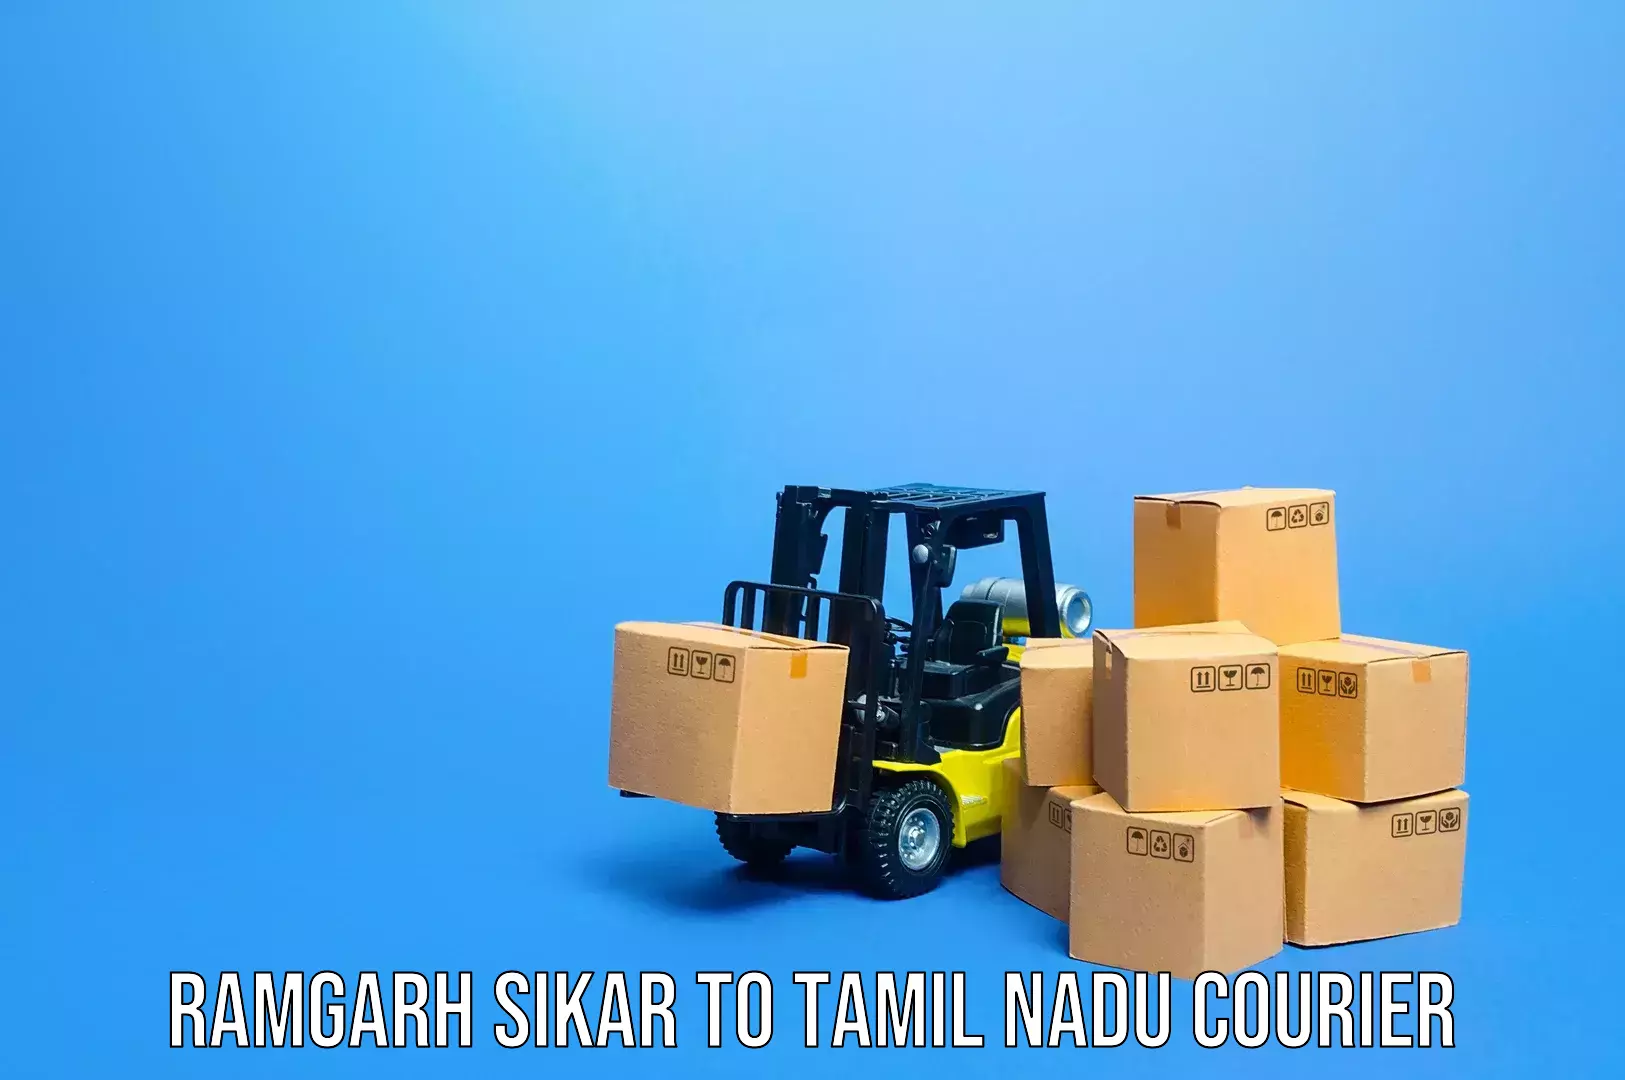 Urgent luggage shipment Ramgarh Sikar to Tamil Nadu